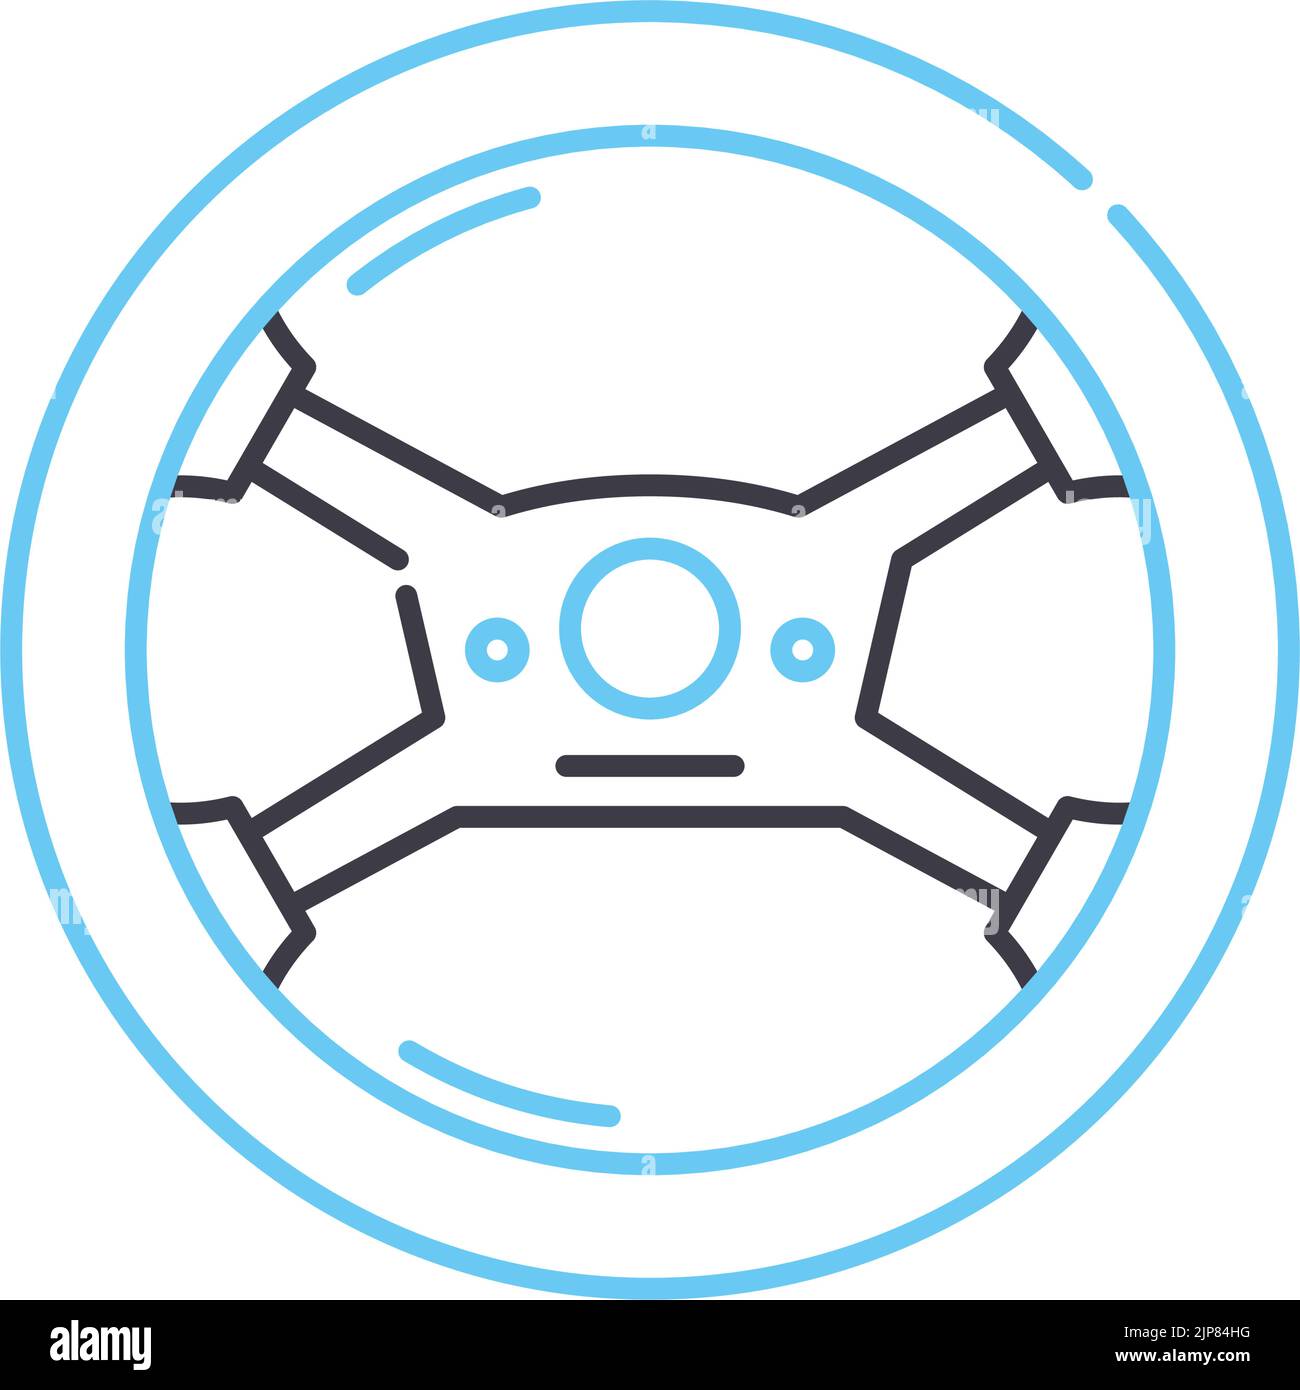 car steering wheel line icon, outline symbol, vector illustration, concept sign Stock Vector